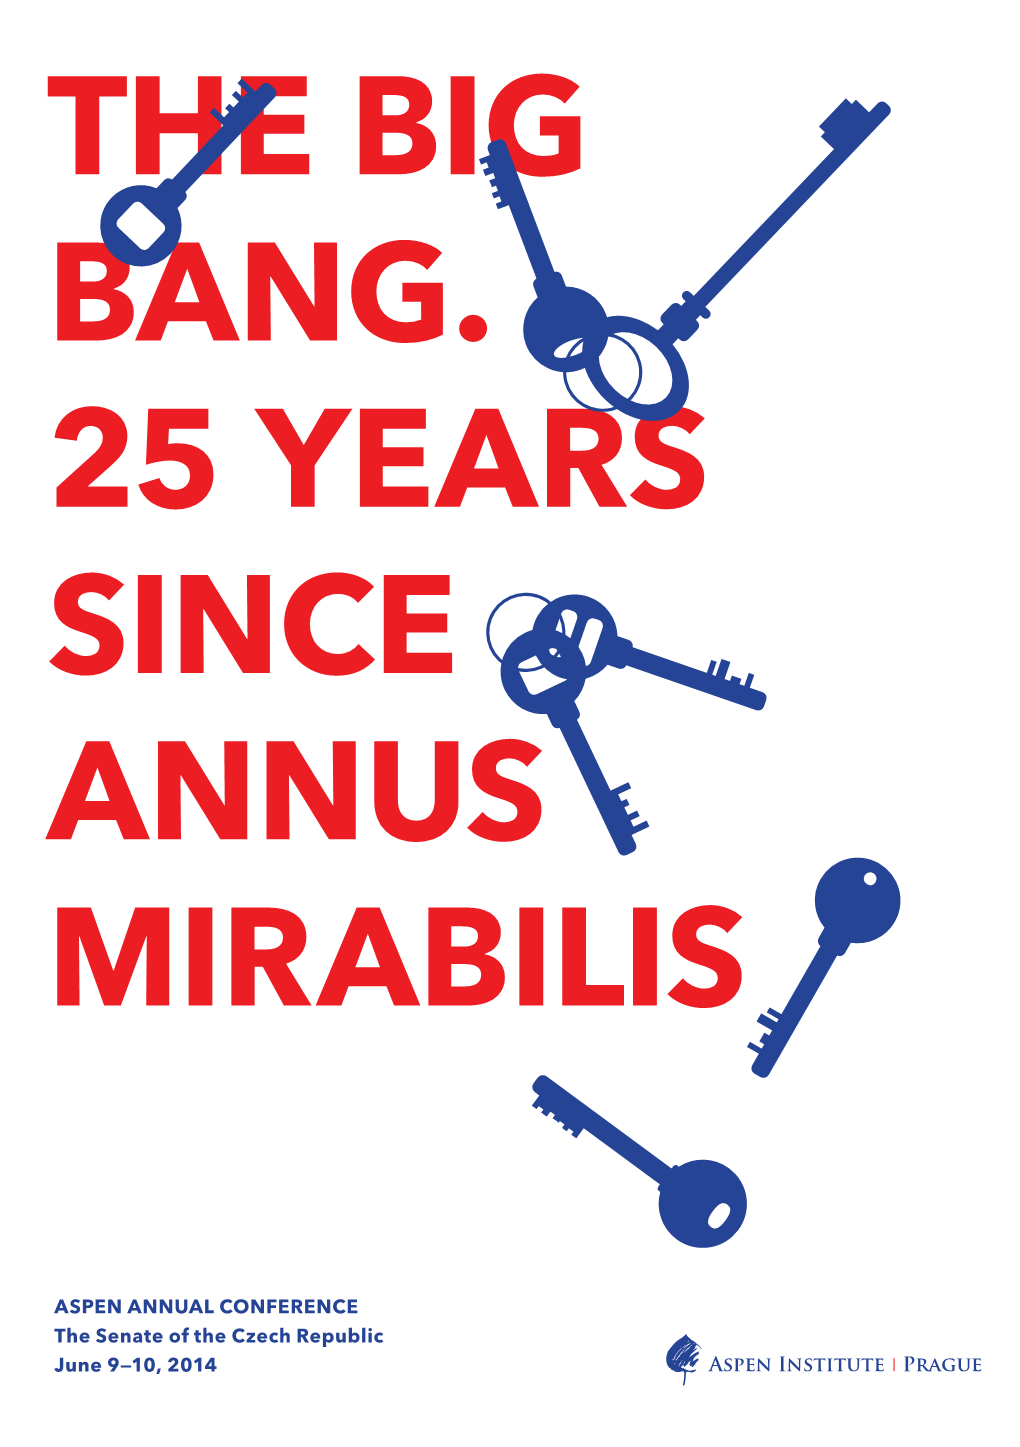 The Big Bang. 25 Years Since Annus Mirabilis